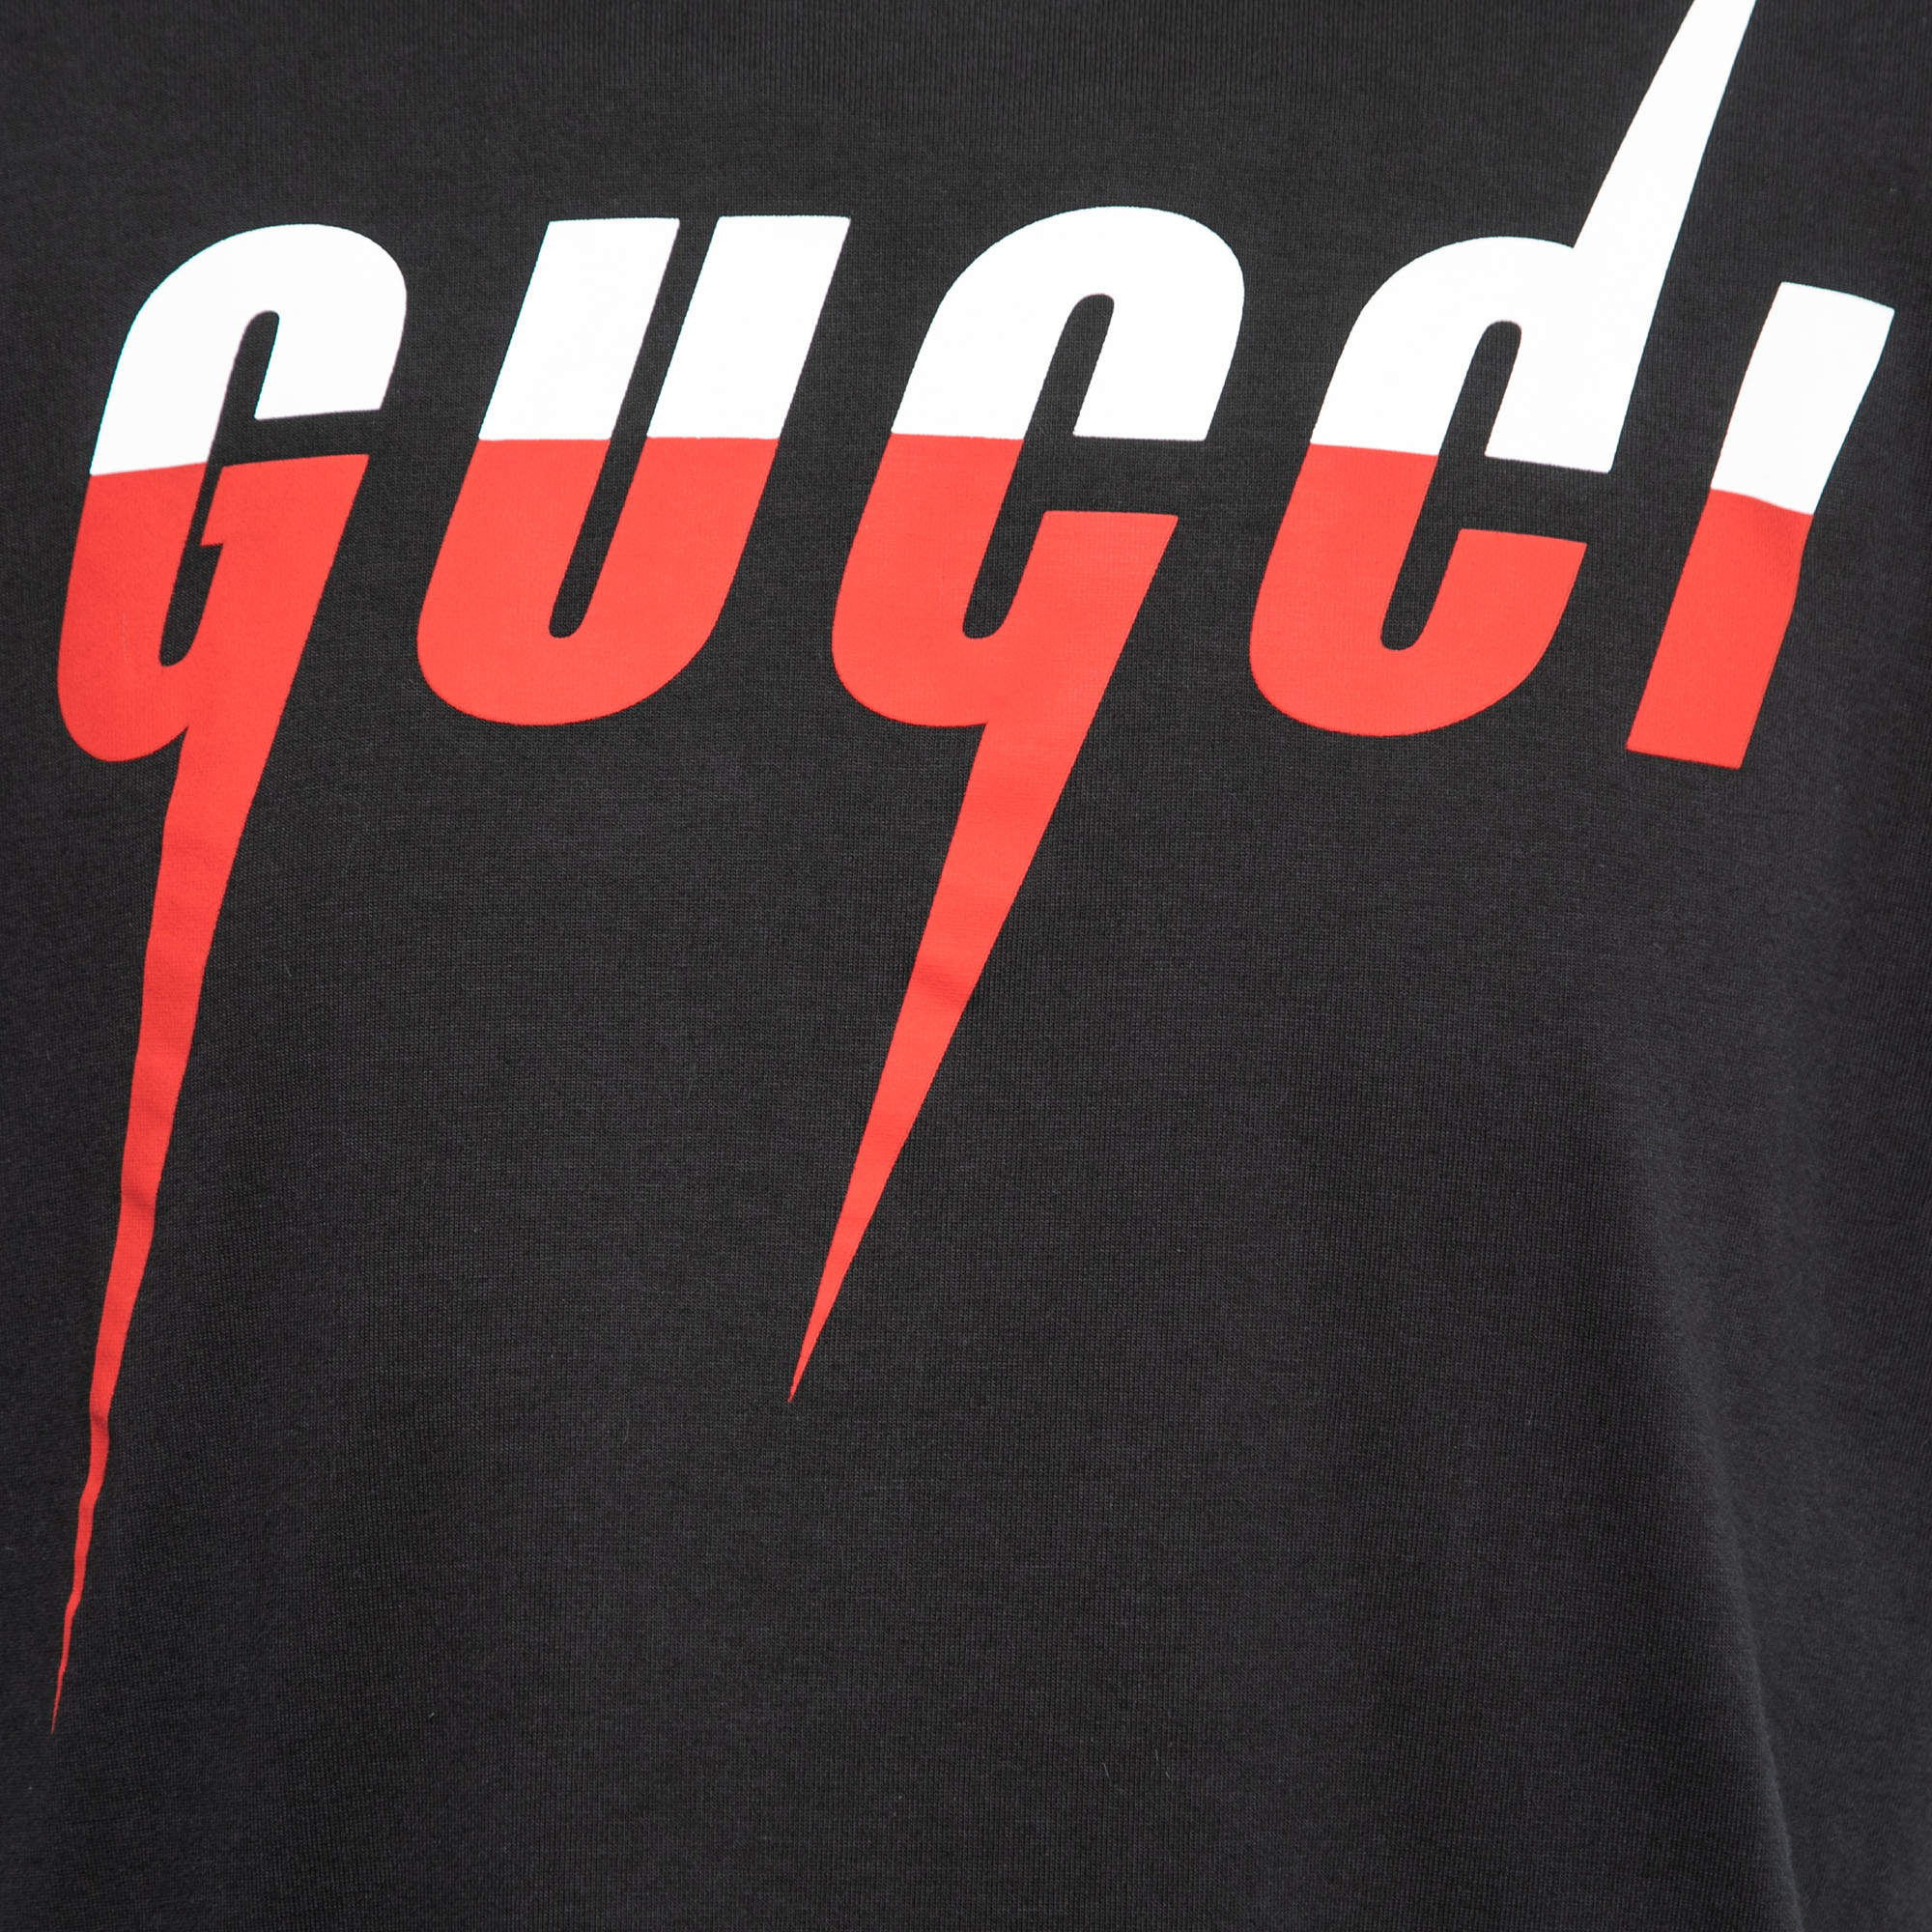 Gucci Blade Logo T-Shirt - White - S